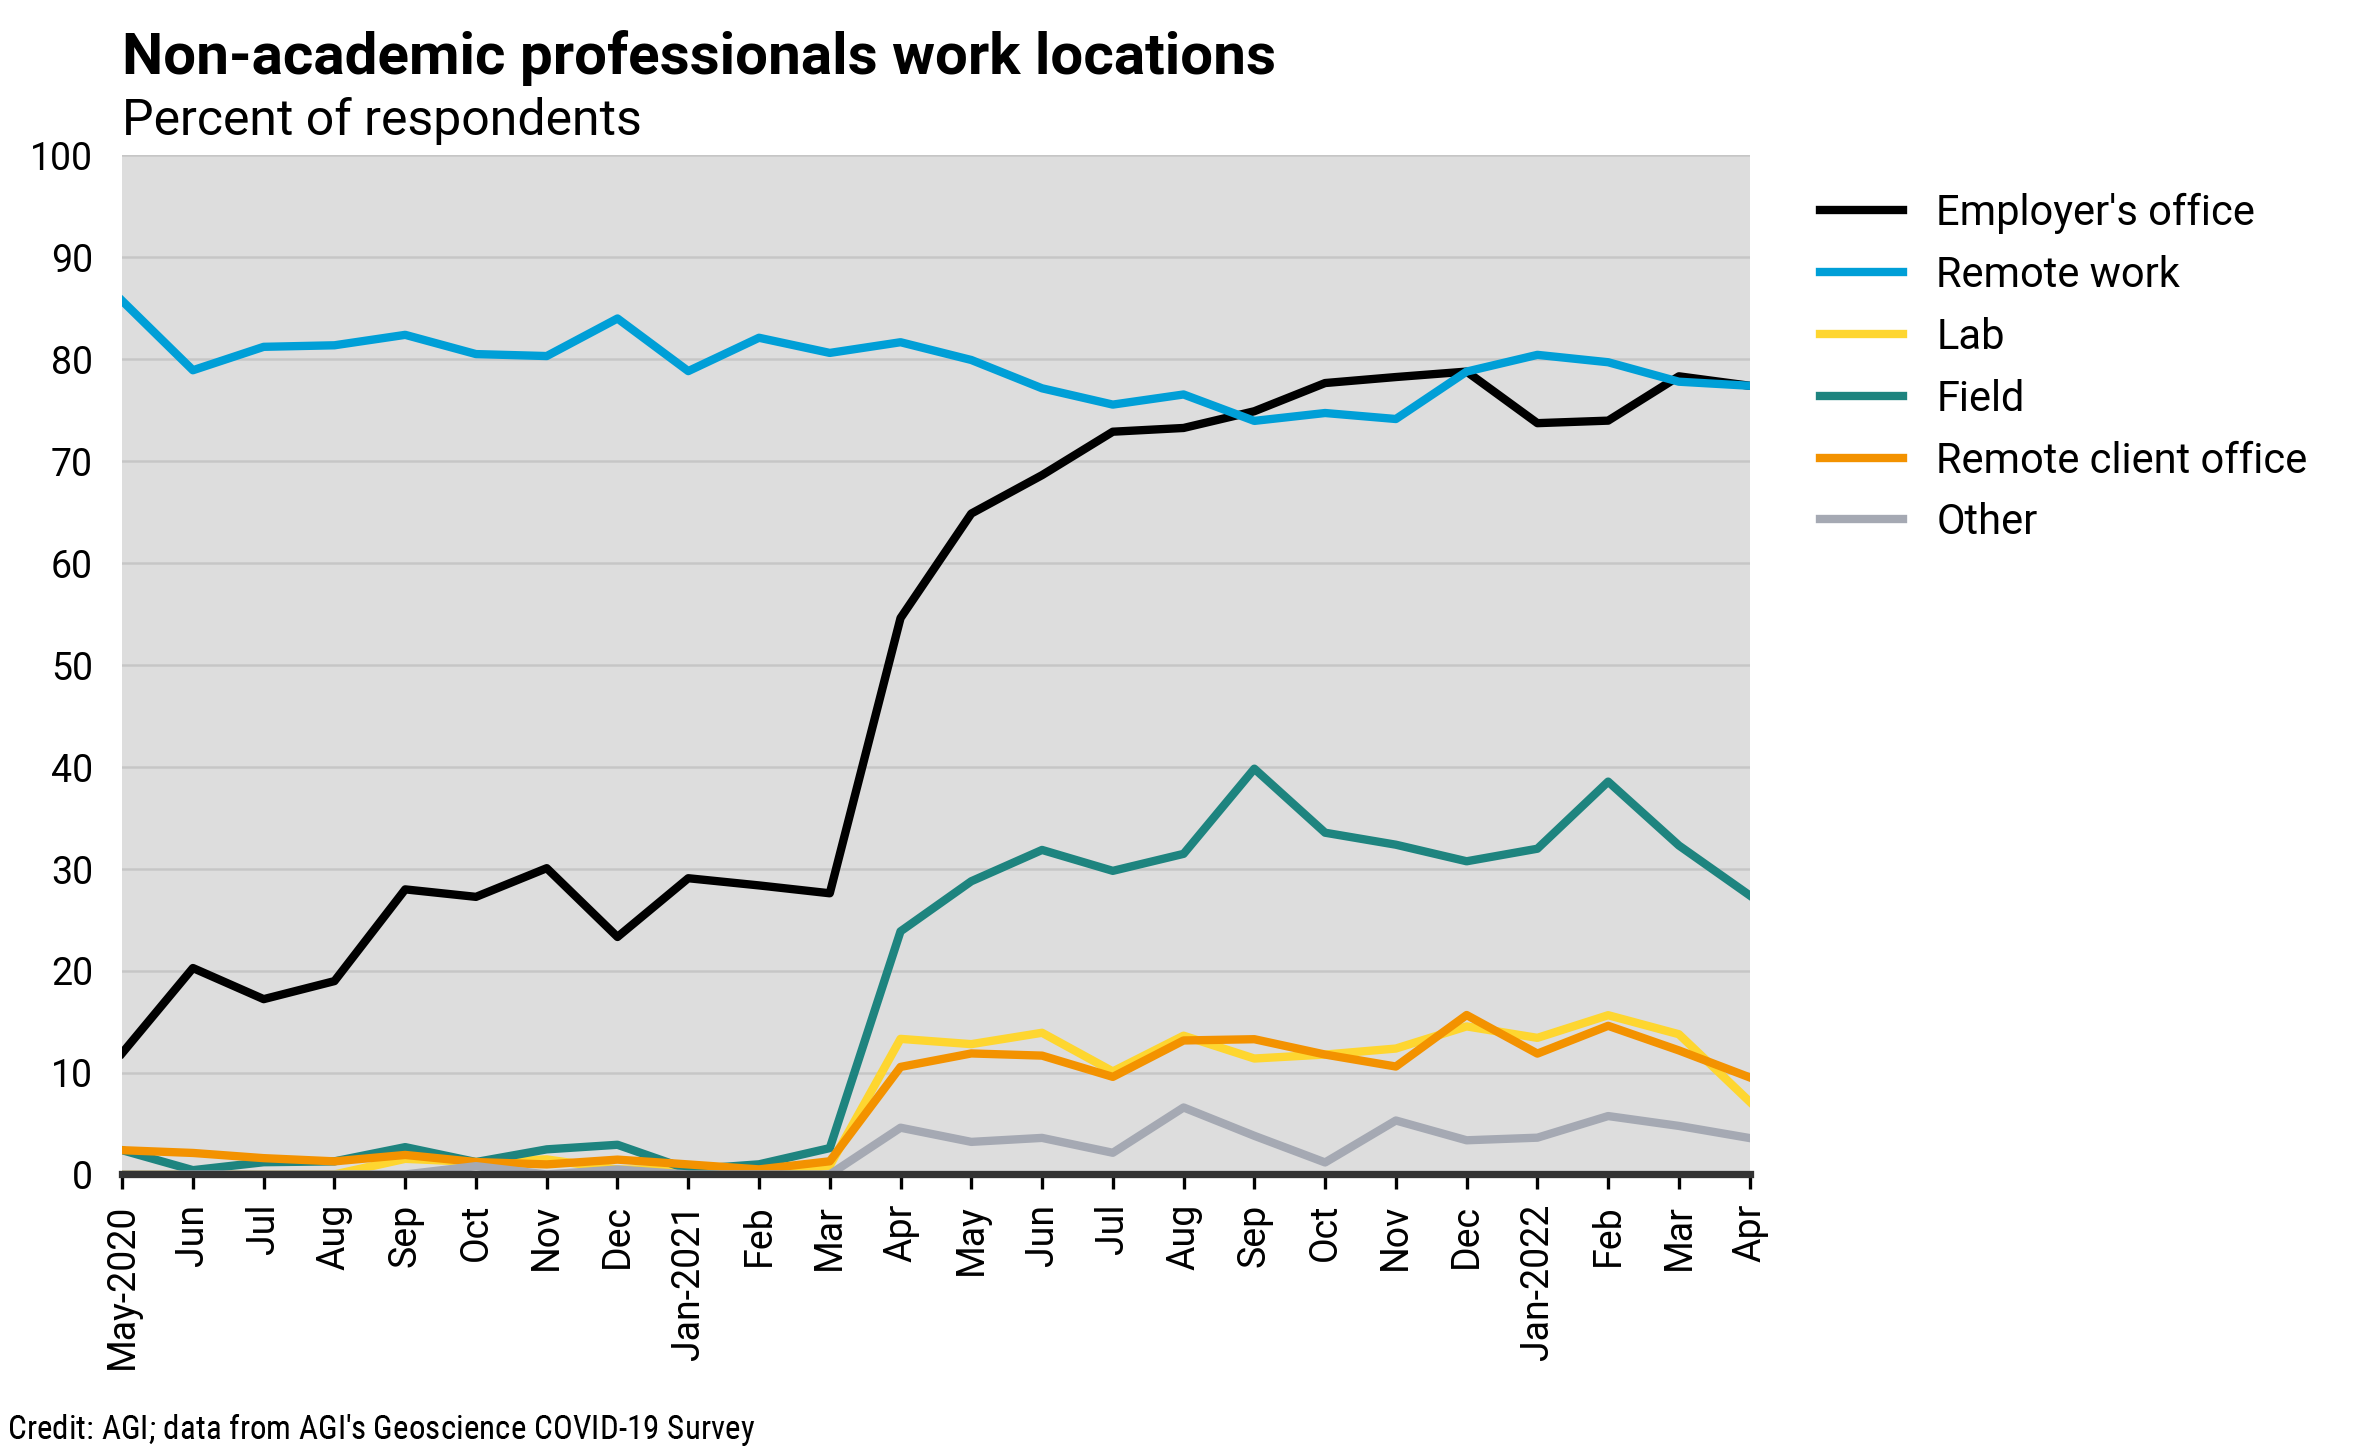 DB_2022-006 chart 05: Non-academic professionals work locations (Credit: AGI; data from AGI's Geoscience COVID-19 Survey)